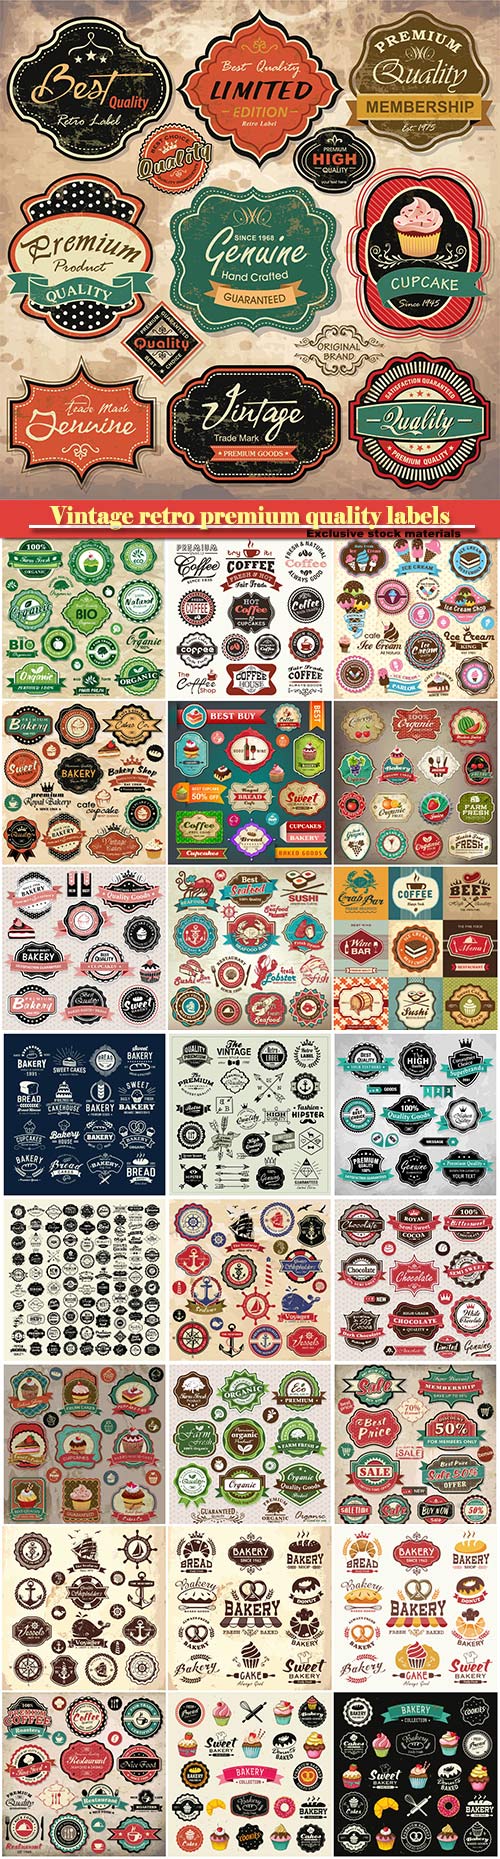 Collection of vintage retro premium quality labels